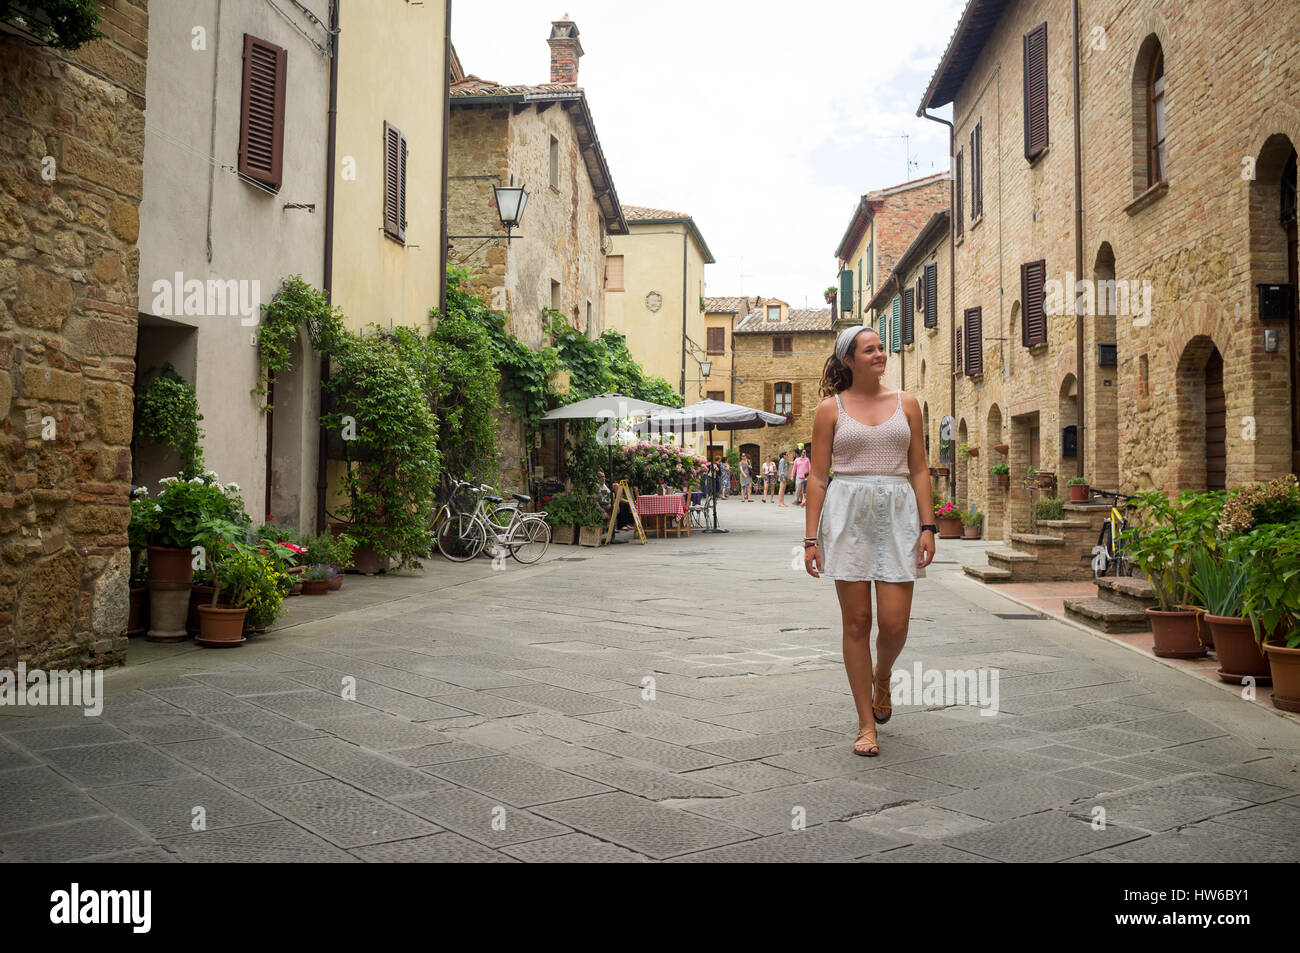 Girl in Pieta, Italy Stock Photo